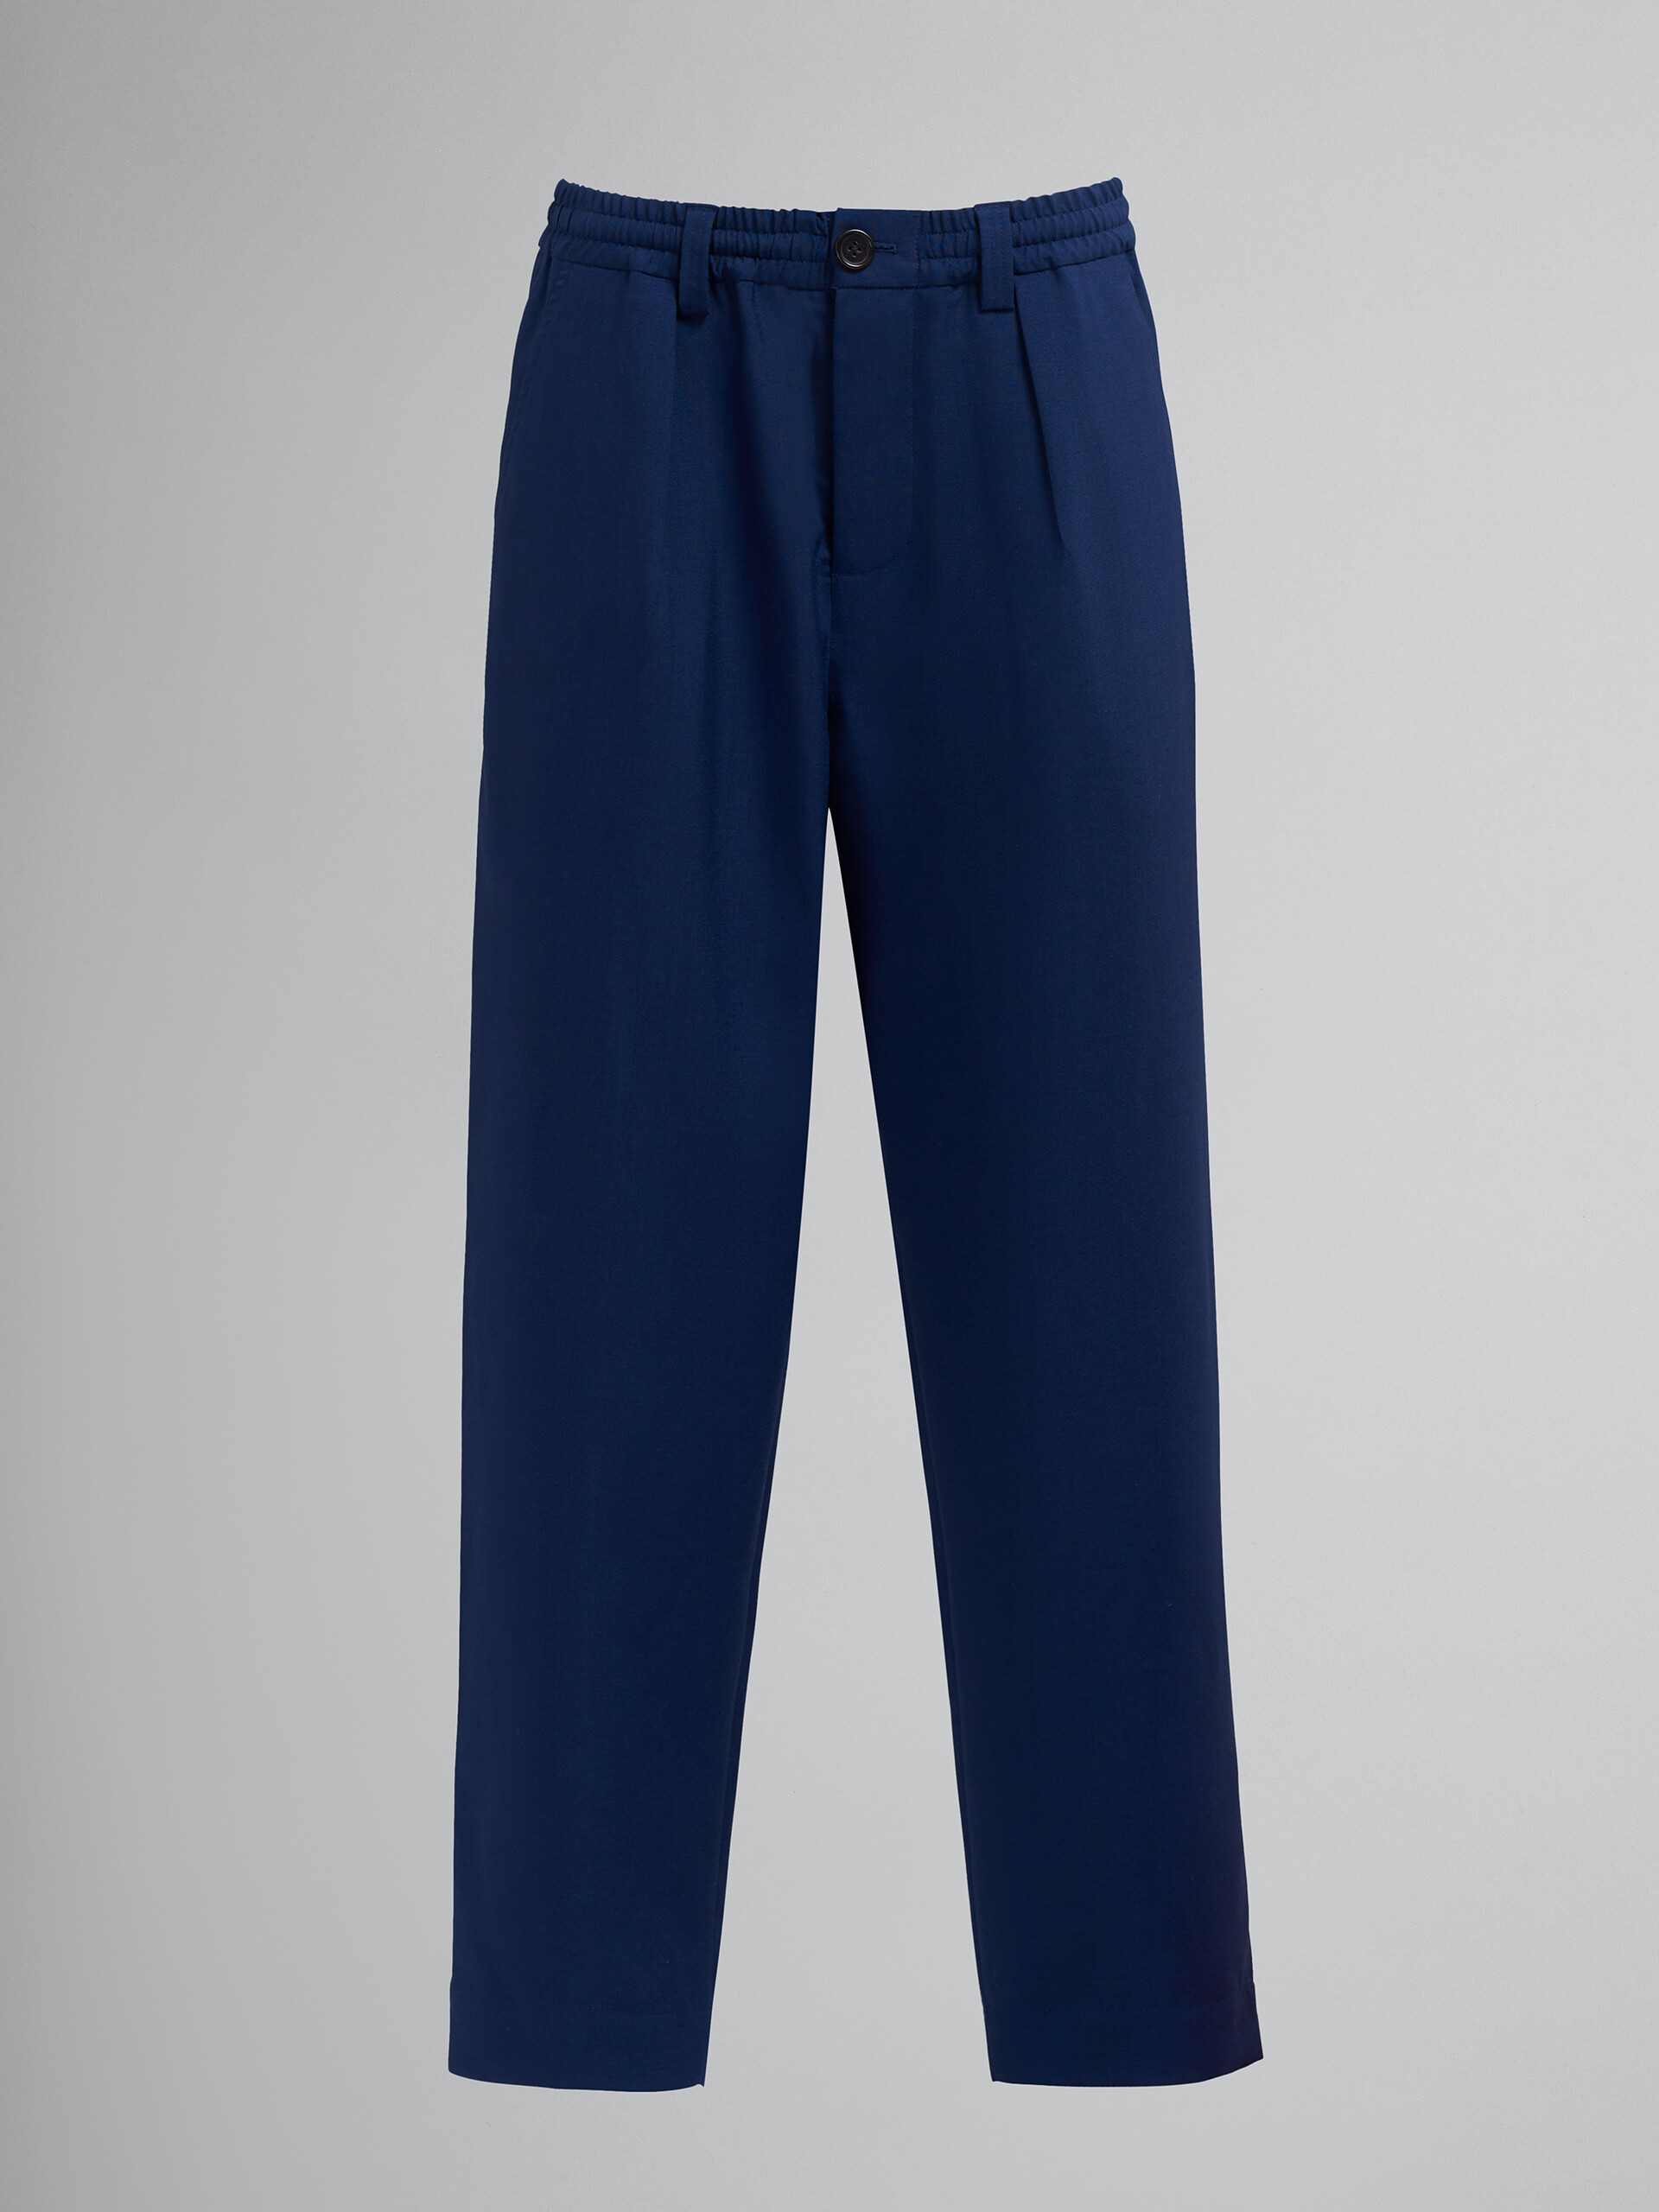 Pantalones de lana tropical color negro azulado - Pantalones - Image 1